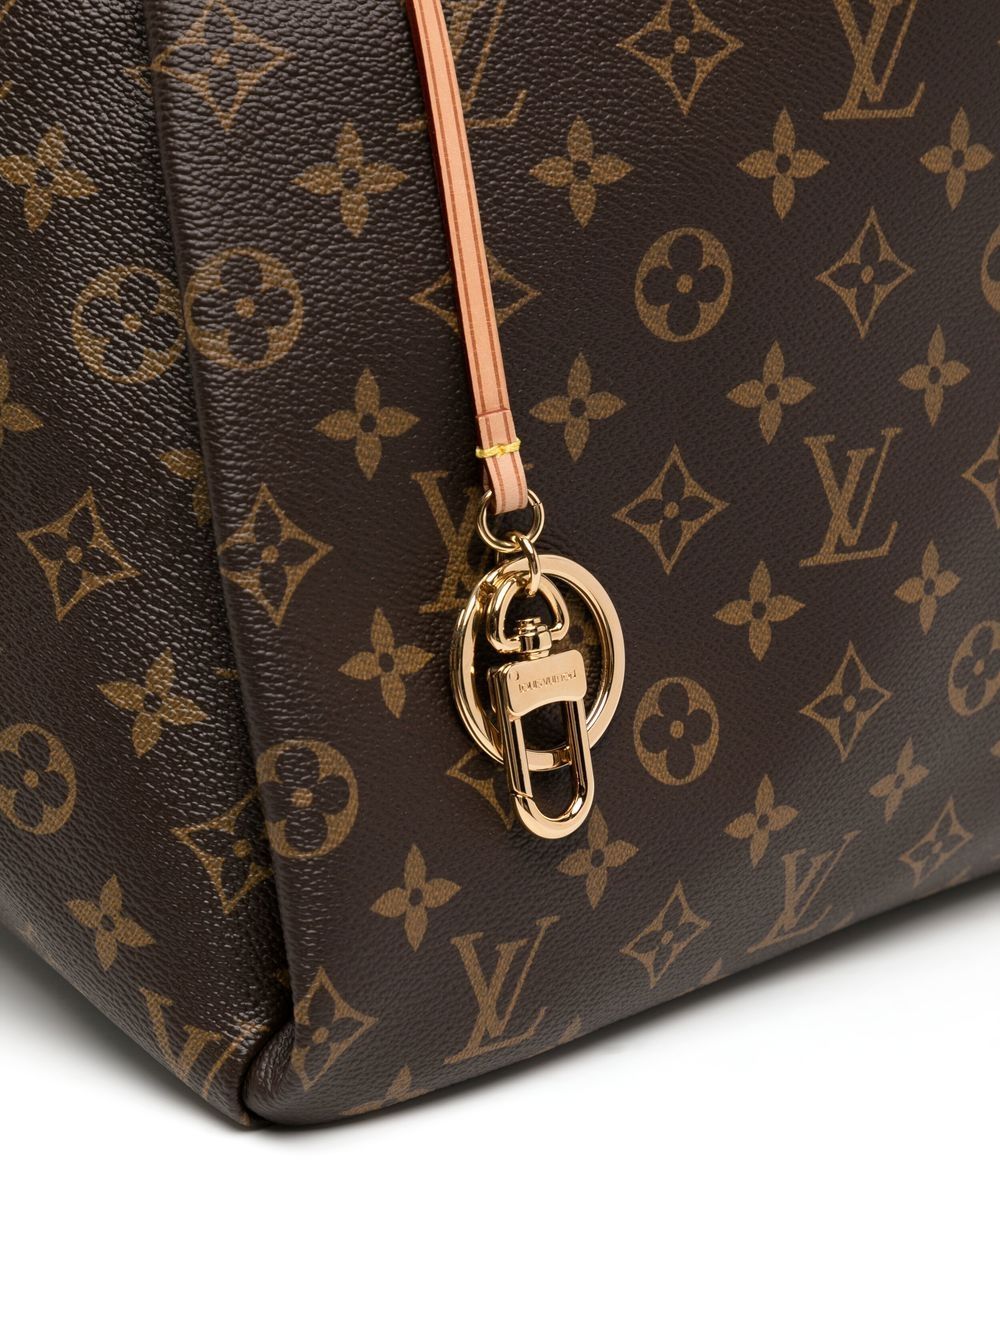 Pre-Owned Louis Vuitton Artsy MM Shoulder Bag 